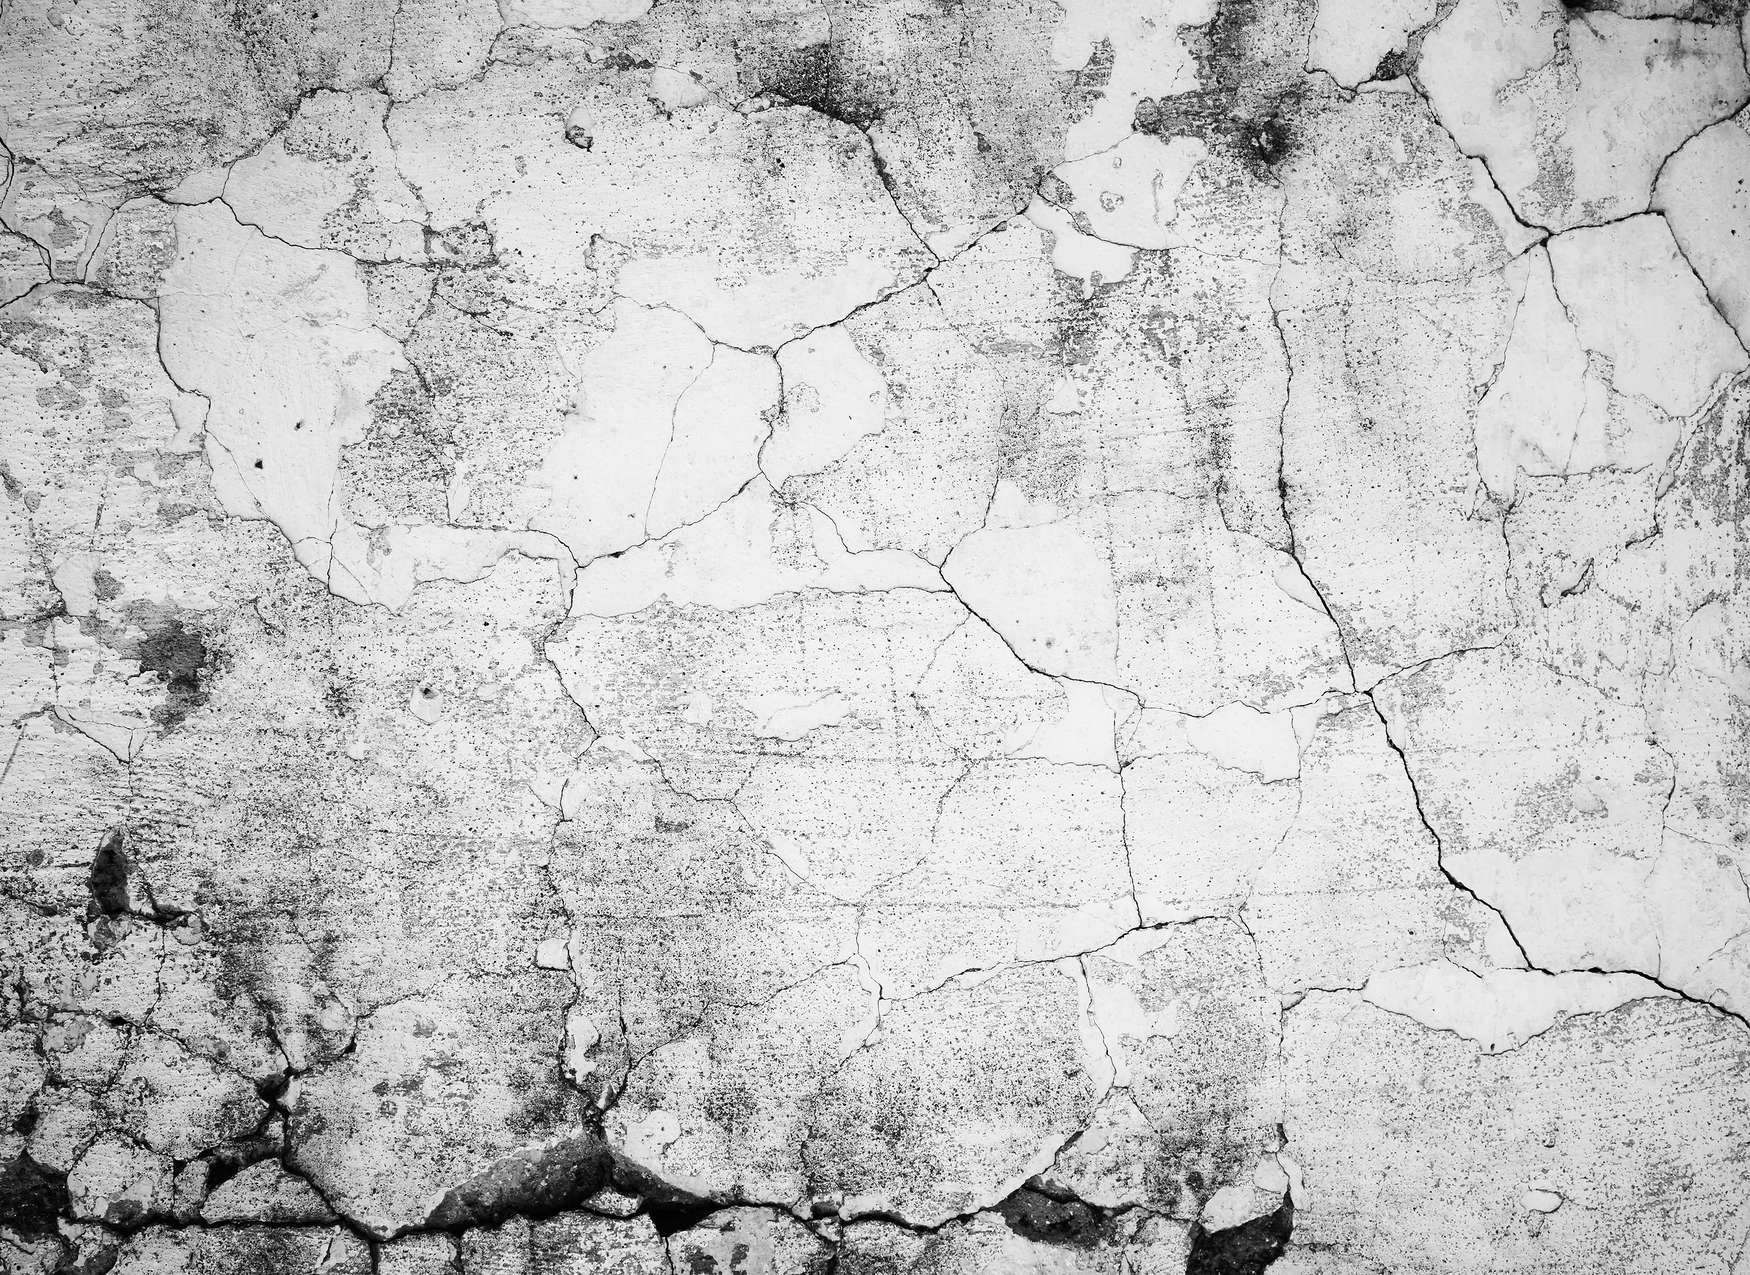             Rustic Concrete Wallpaper - White, Grey, Black
        